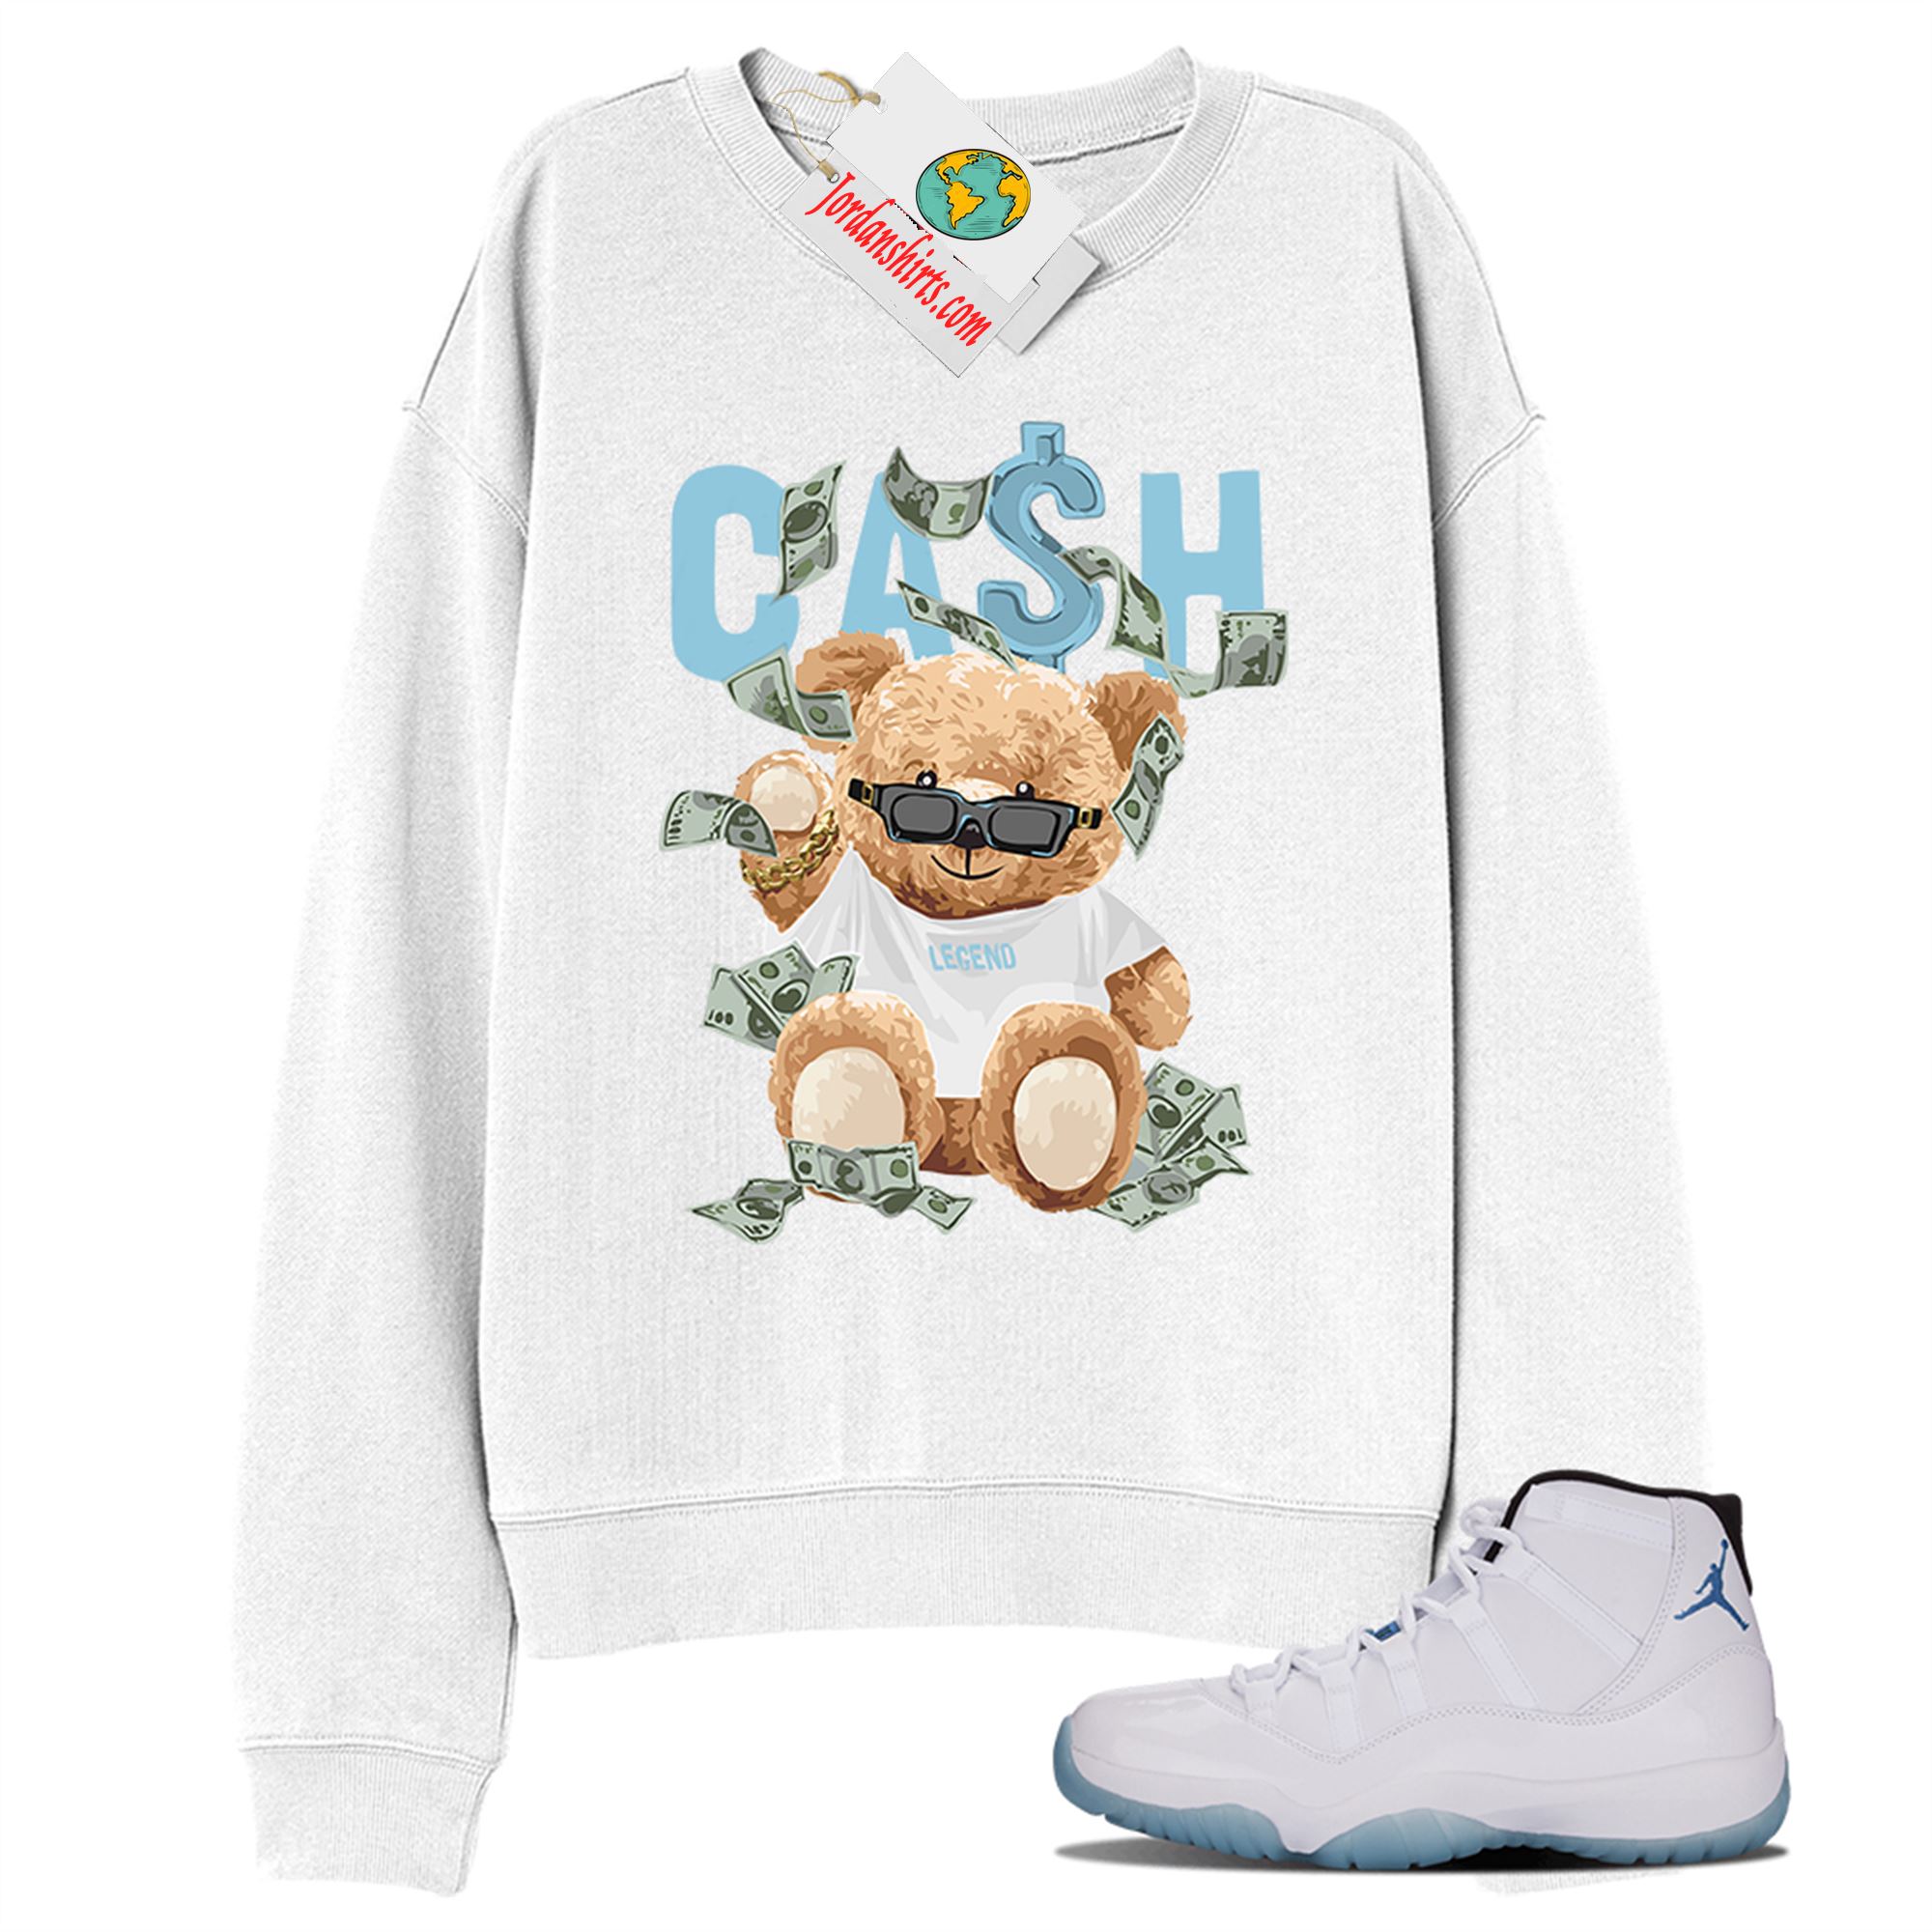 Jordan 11 Sweatshirt, Cash Teddy Bear In Sunglasses White Sweatshirt Air Jordan 11 Legend Blue 11s Full Size Up To 5xl